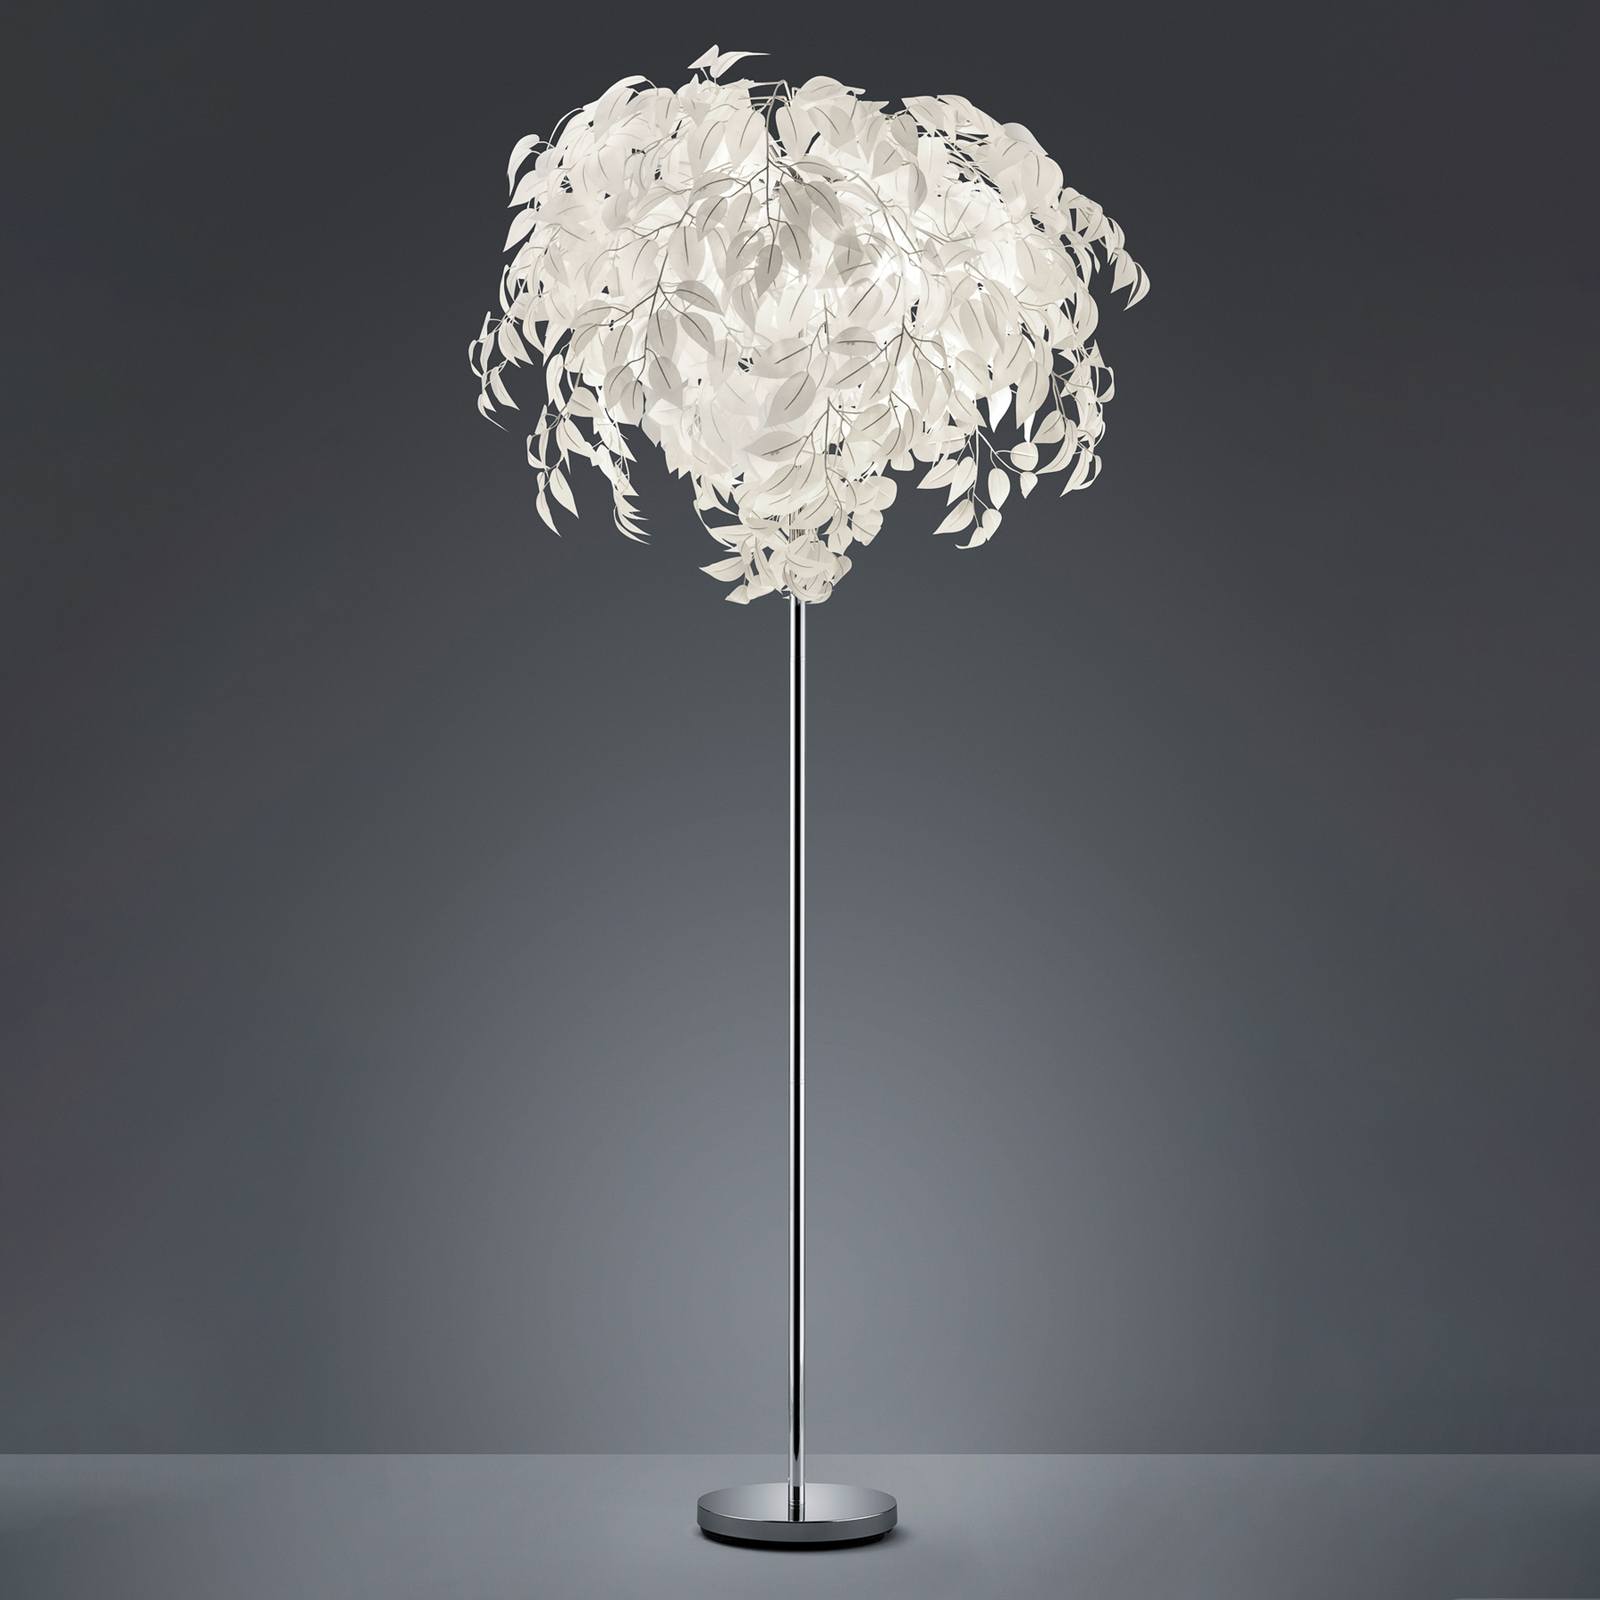 Leavy gulvlampe, højde 180 cm, krom/hvid, metal/plast